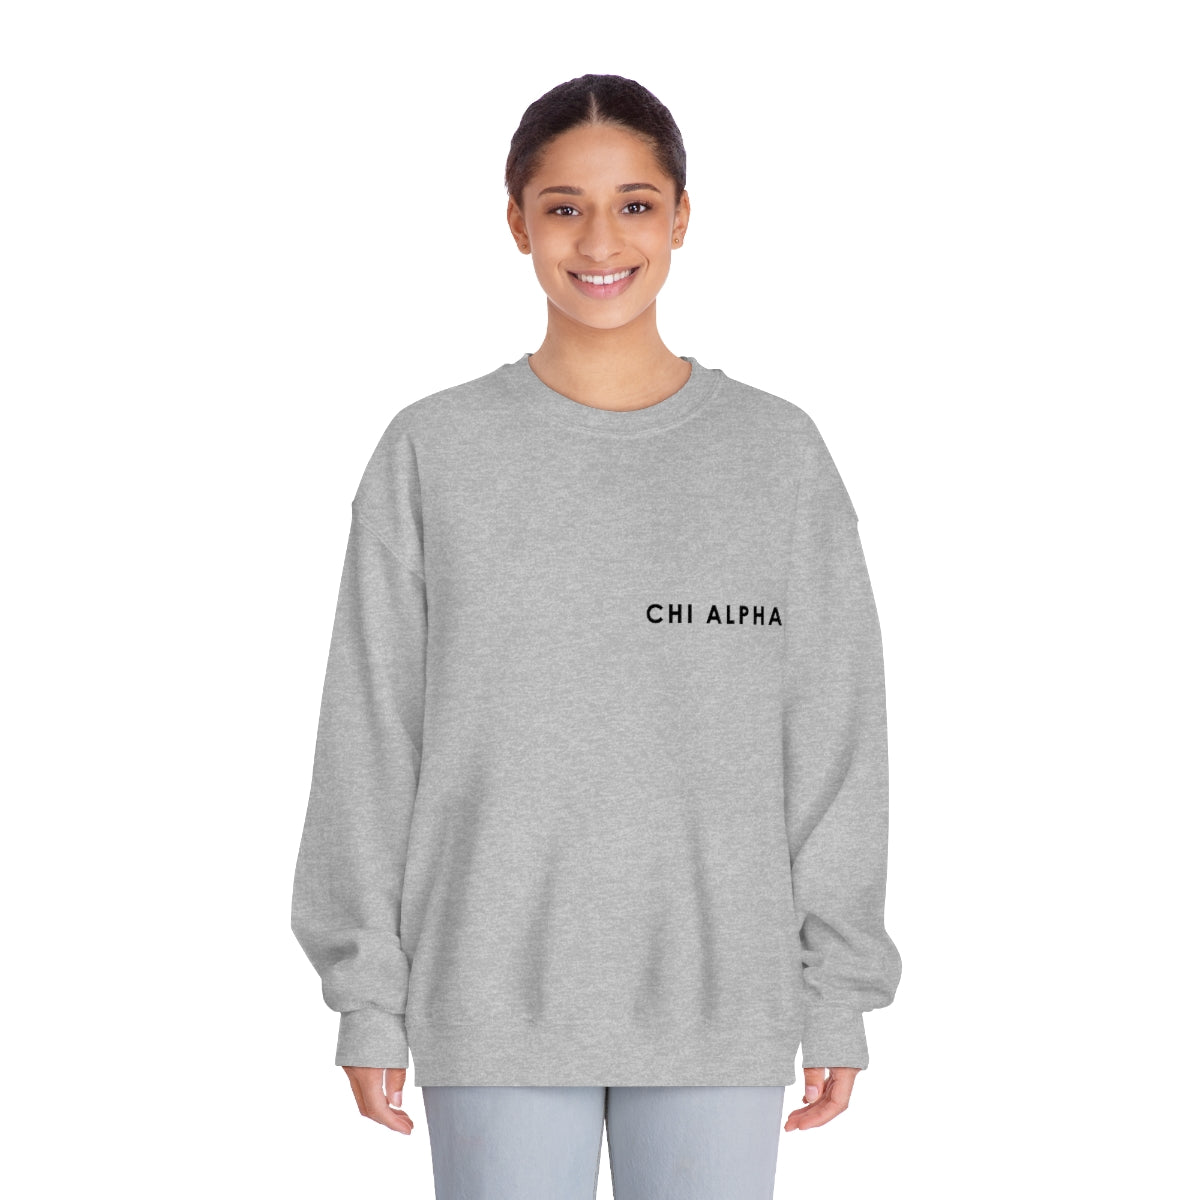 Chi Alpha Crewneck Sweatshirt